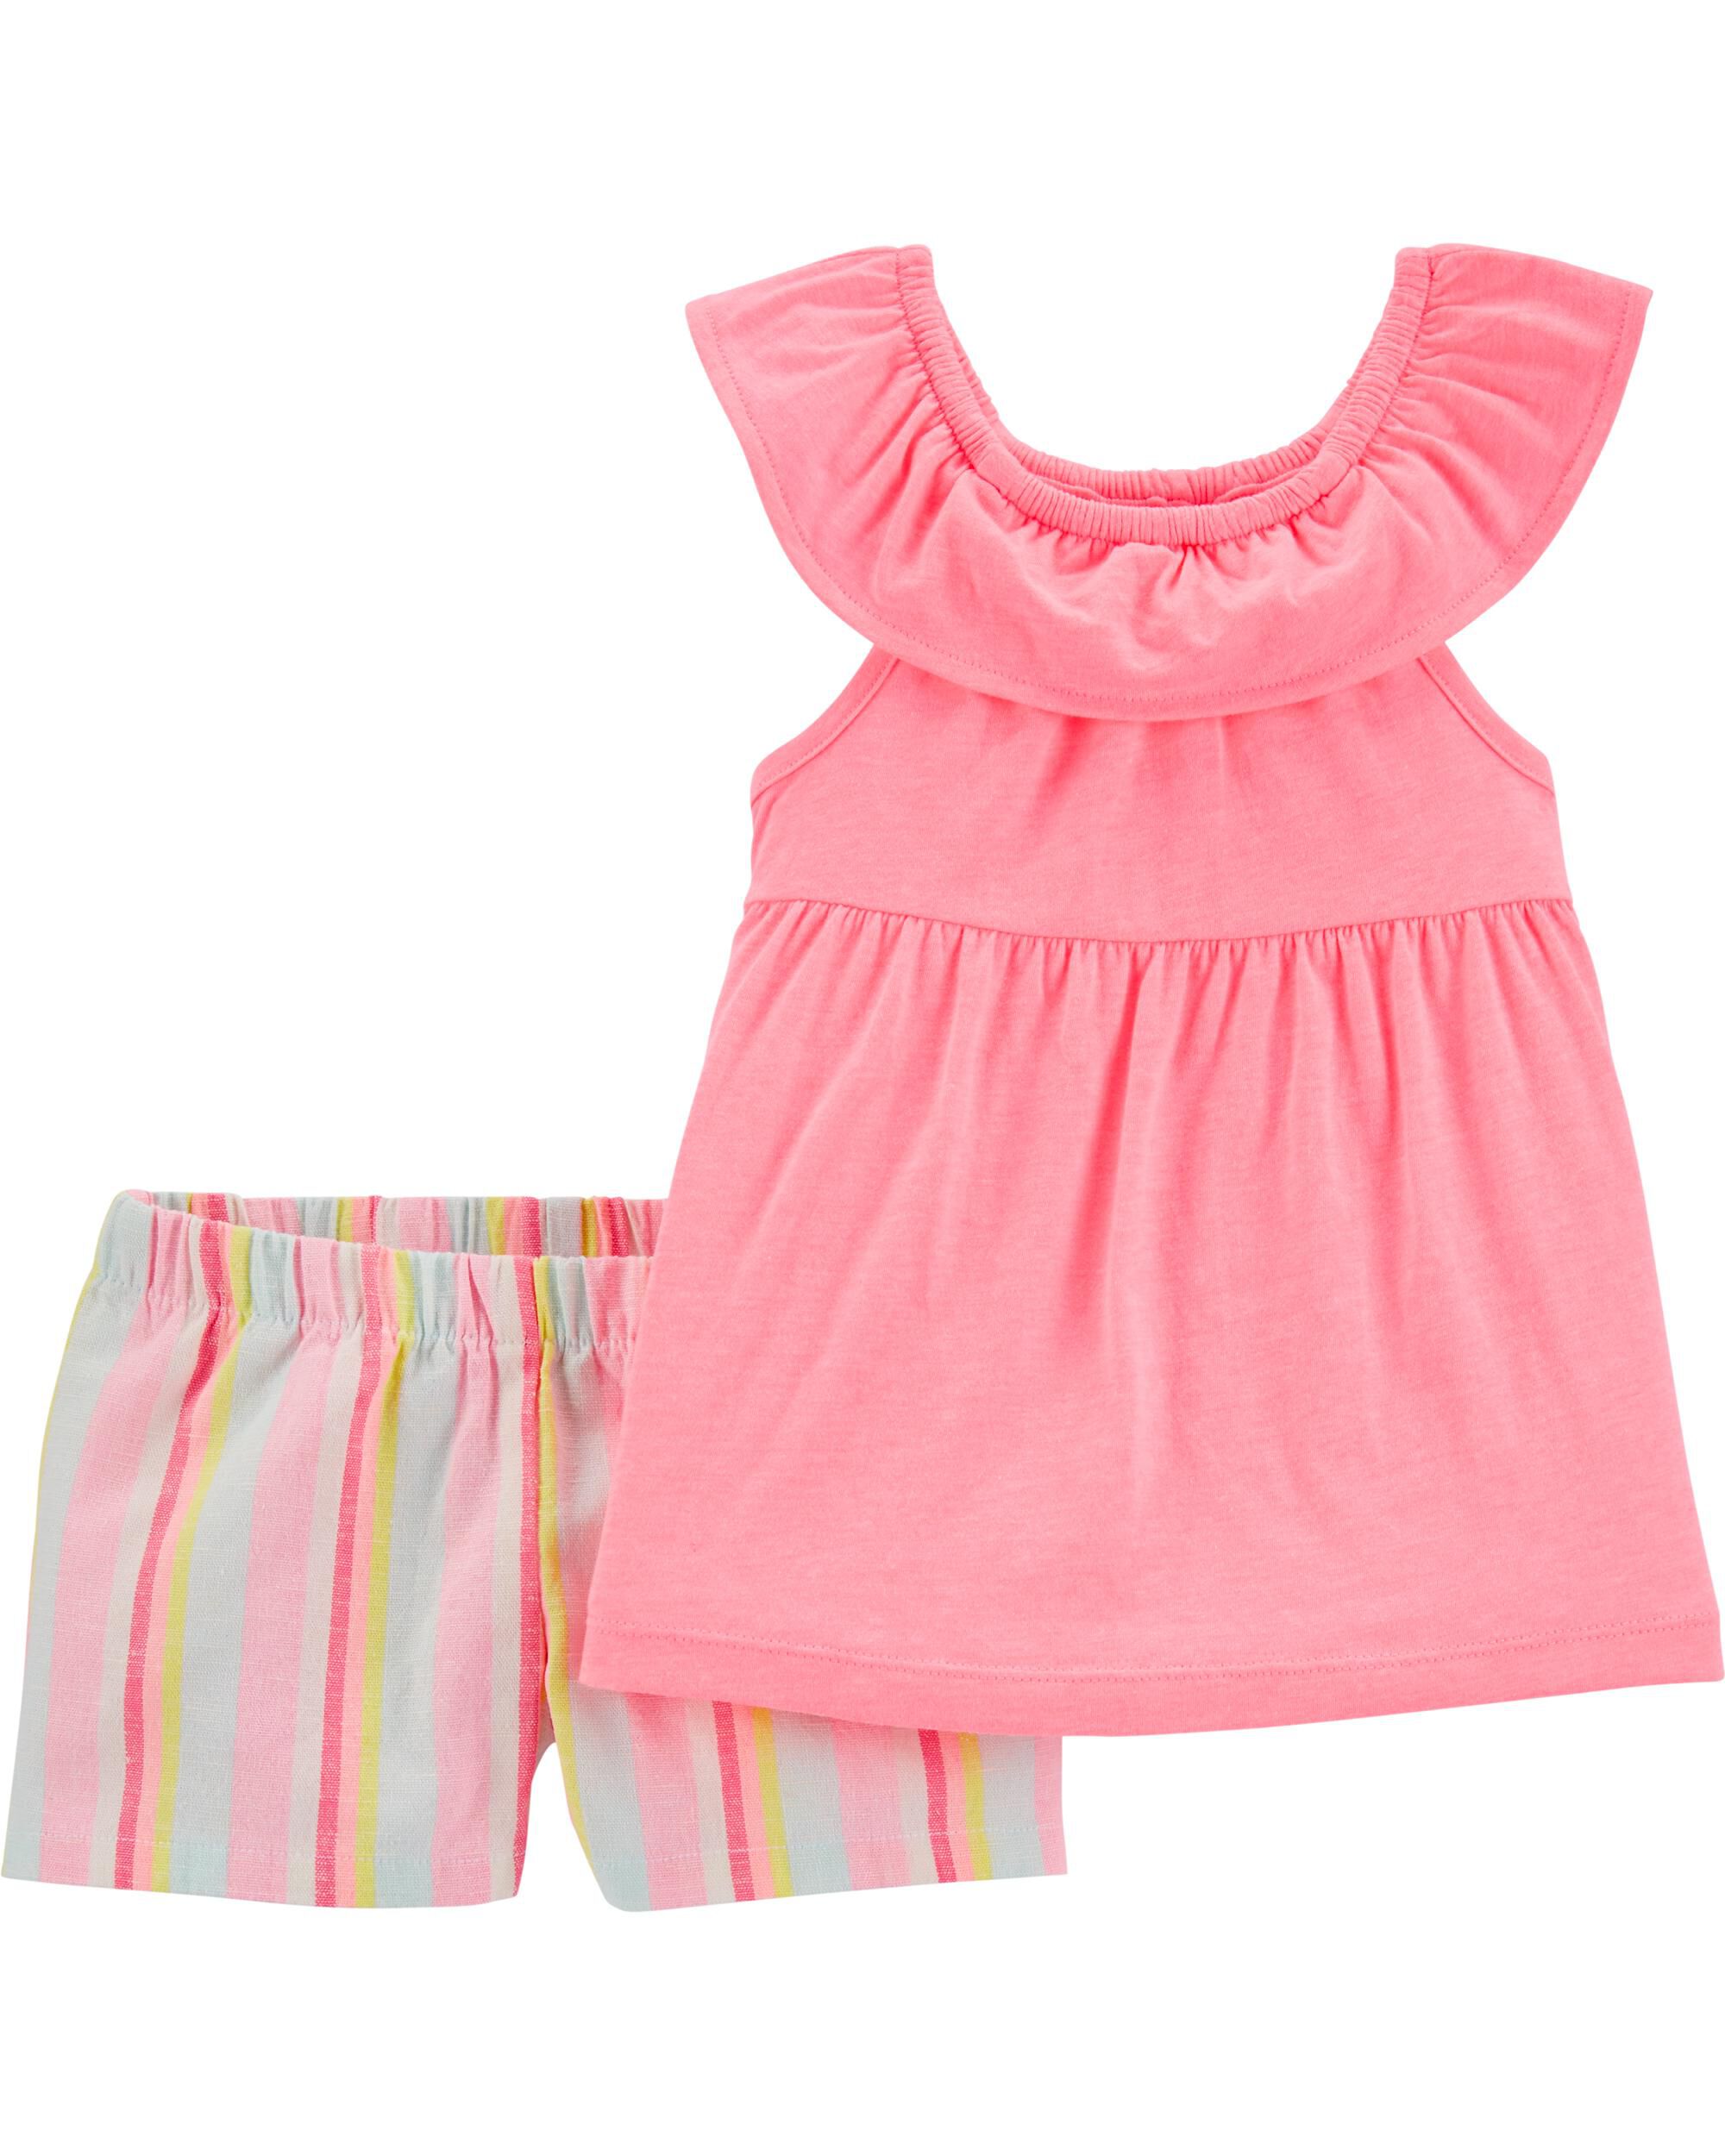 neon baby girl clothes